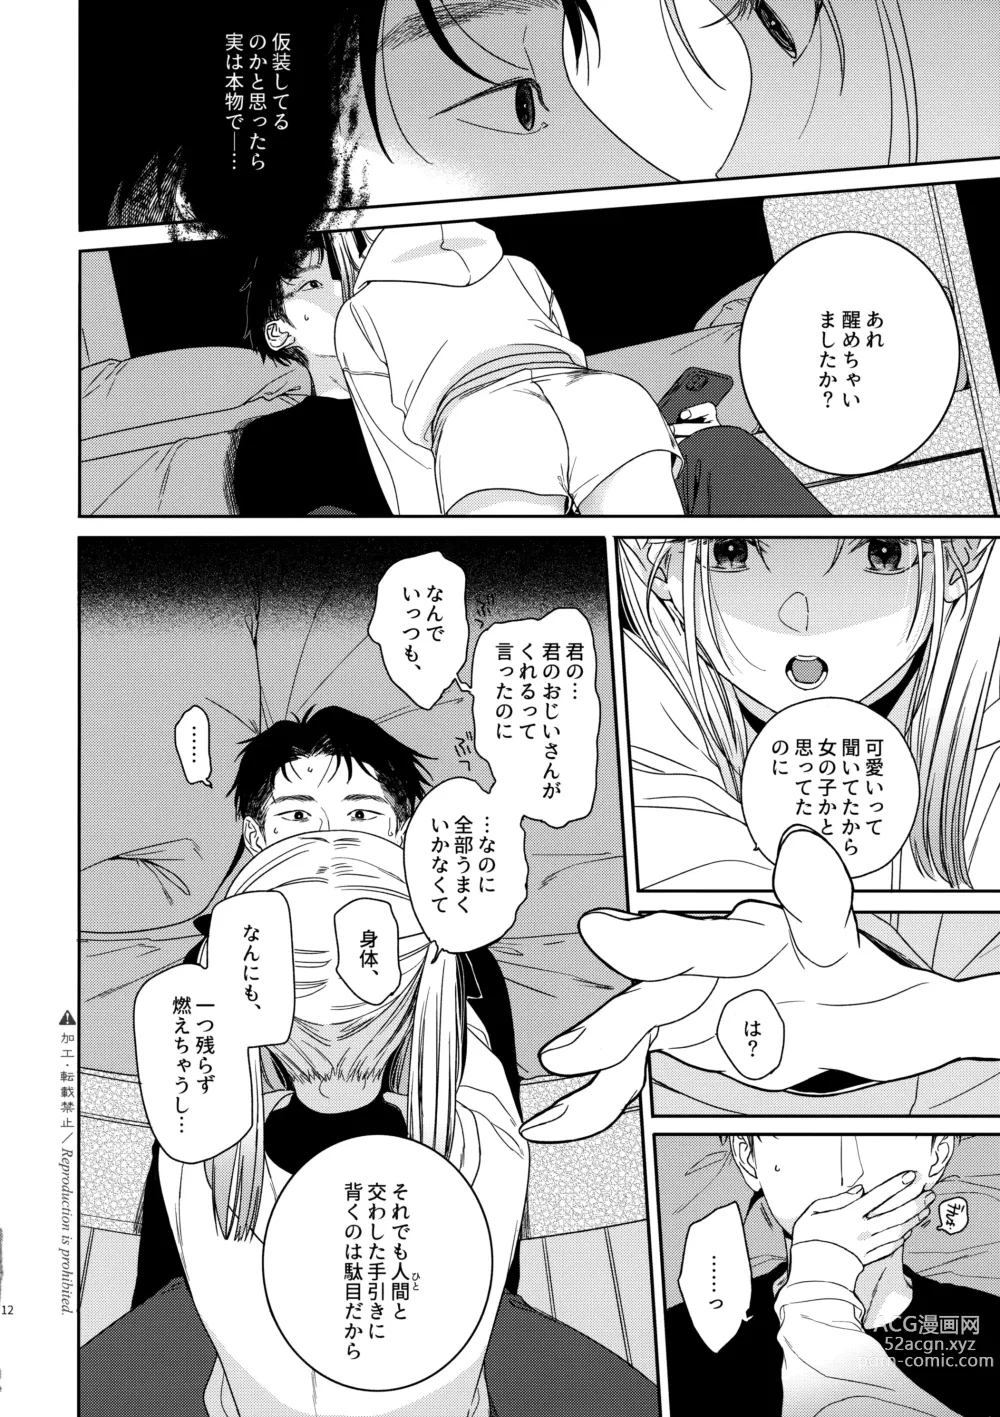 Page 11 of doujinshi Katami to Getsumei